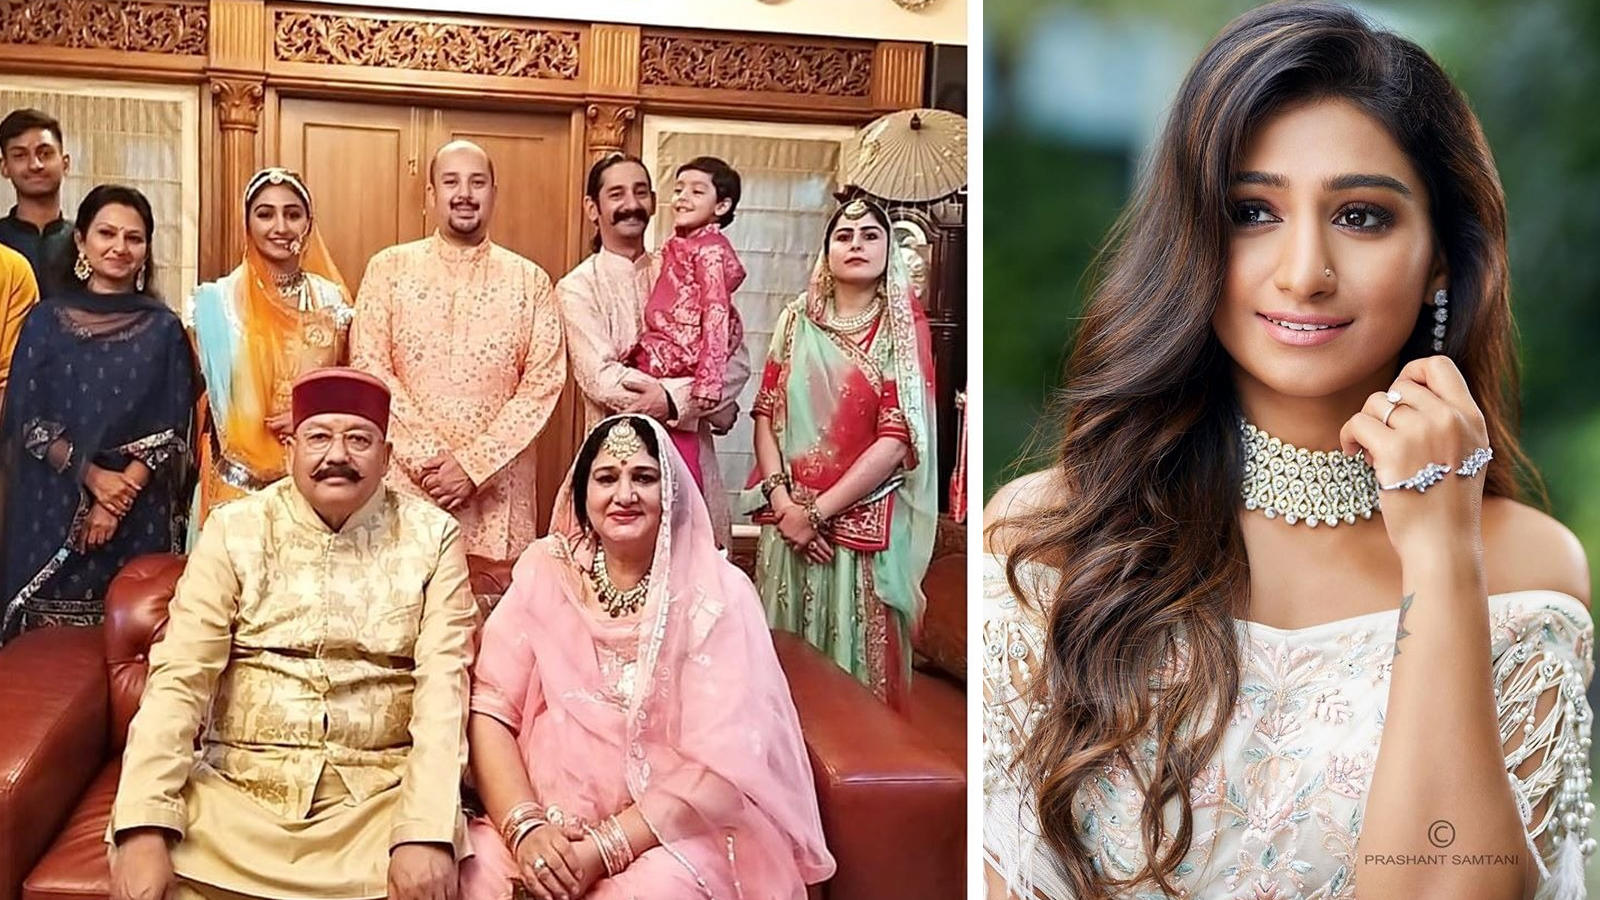 Tv Actress Mohena Kumari Singh Along With 7 Family Members From